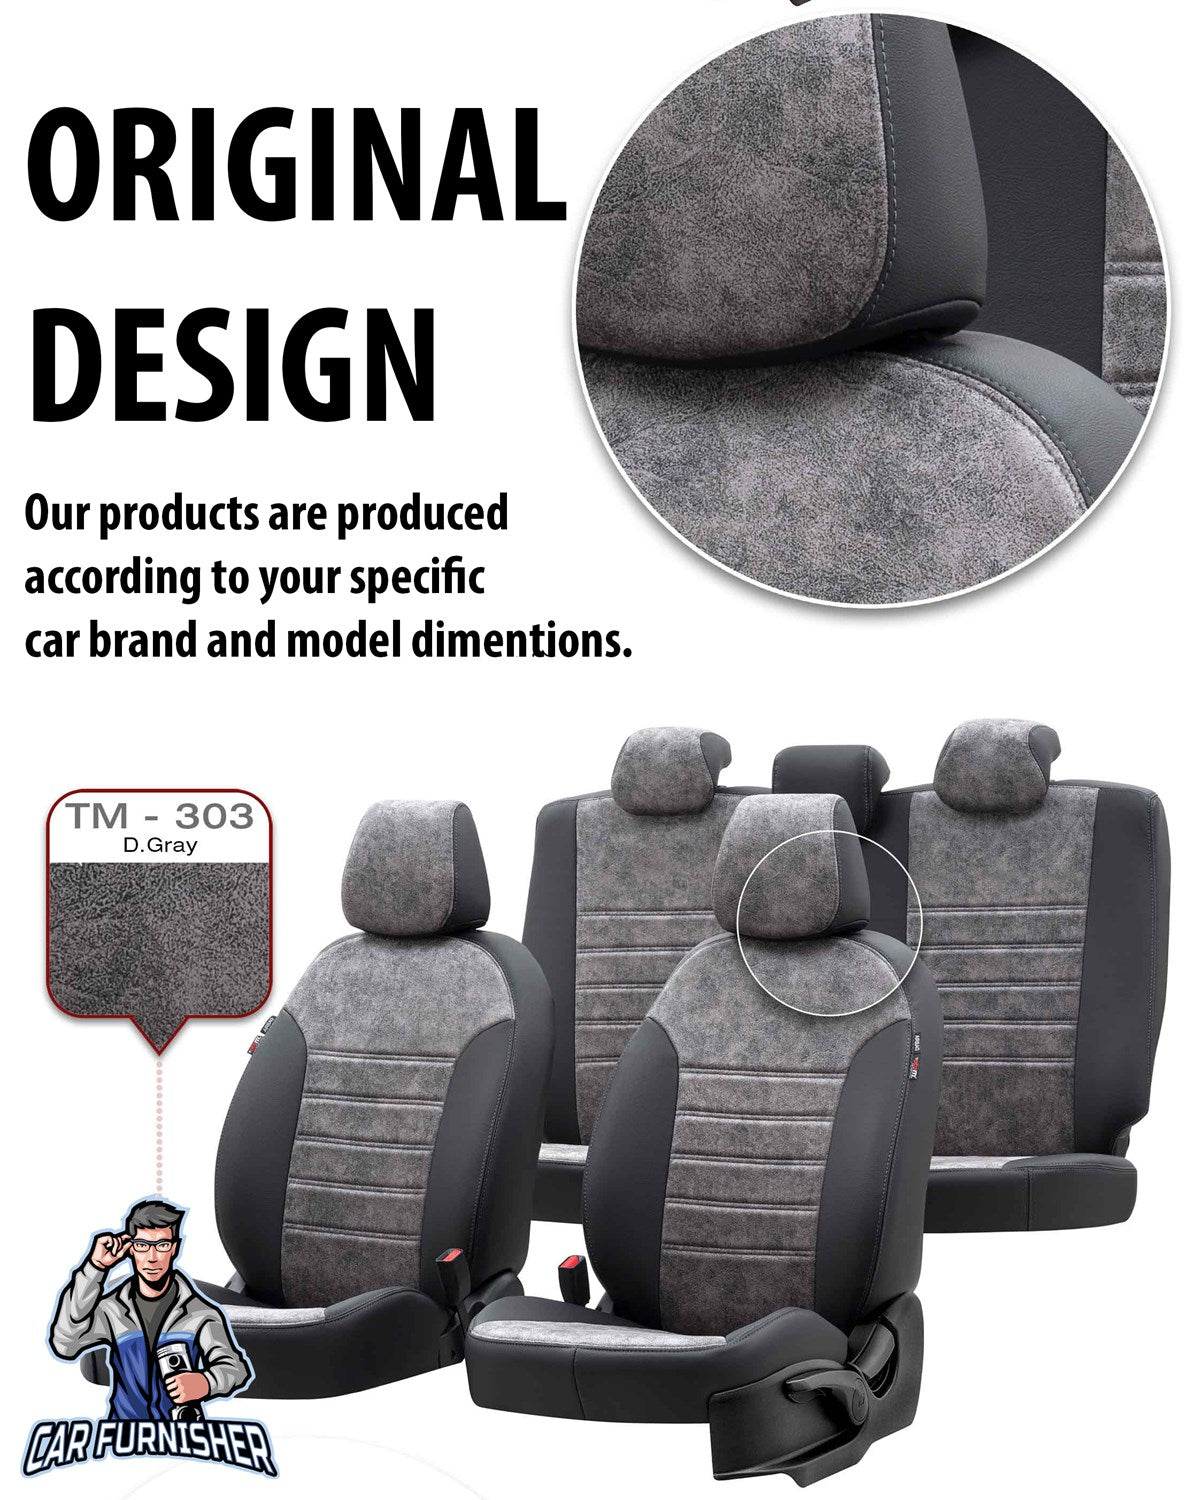 Kia Carens Seat Cover Milano Suede Design Black Leather & Suede Fabric